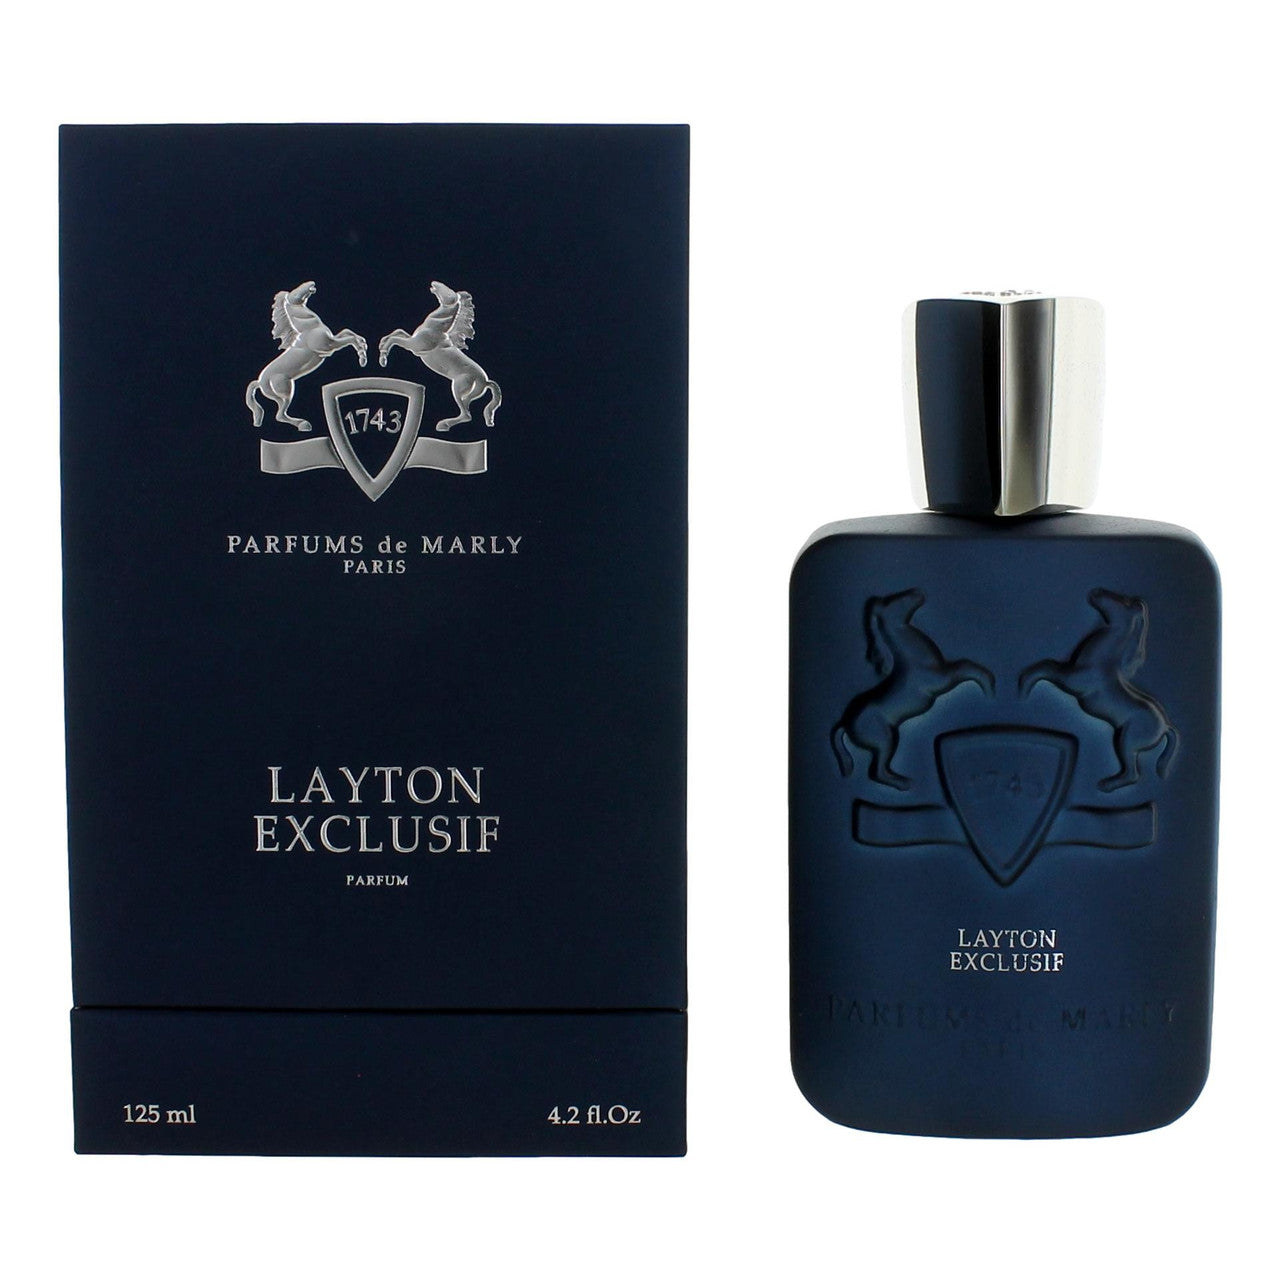 4.2 oz bottle of parfums de marly layton exclusif in a blue bottle